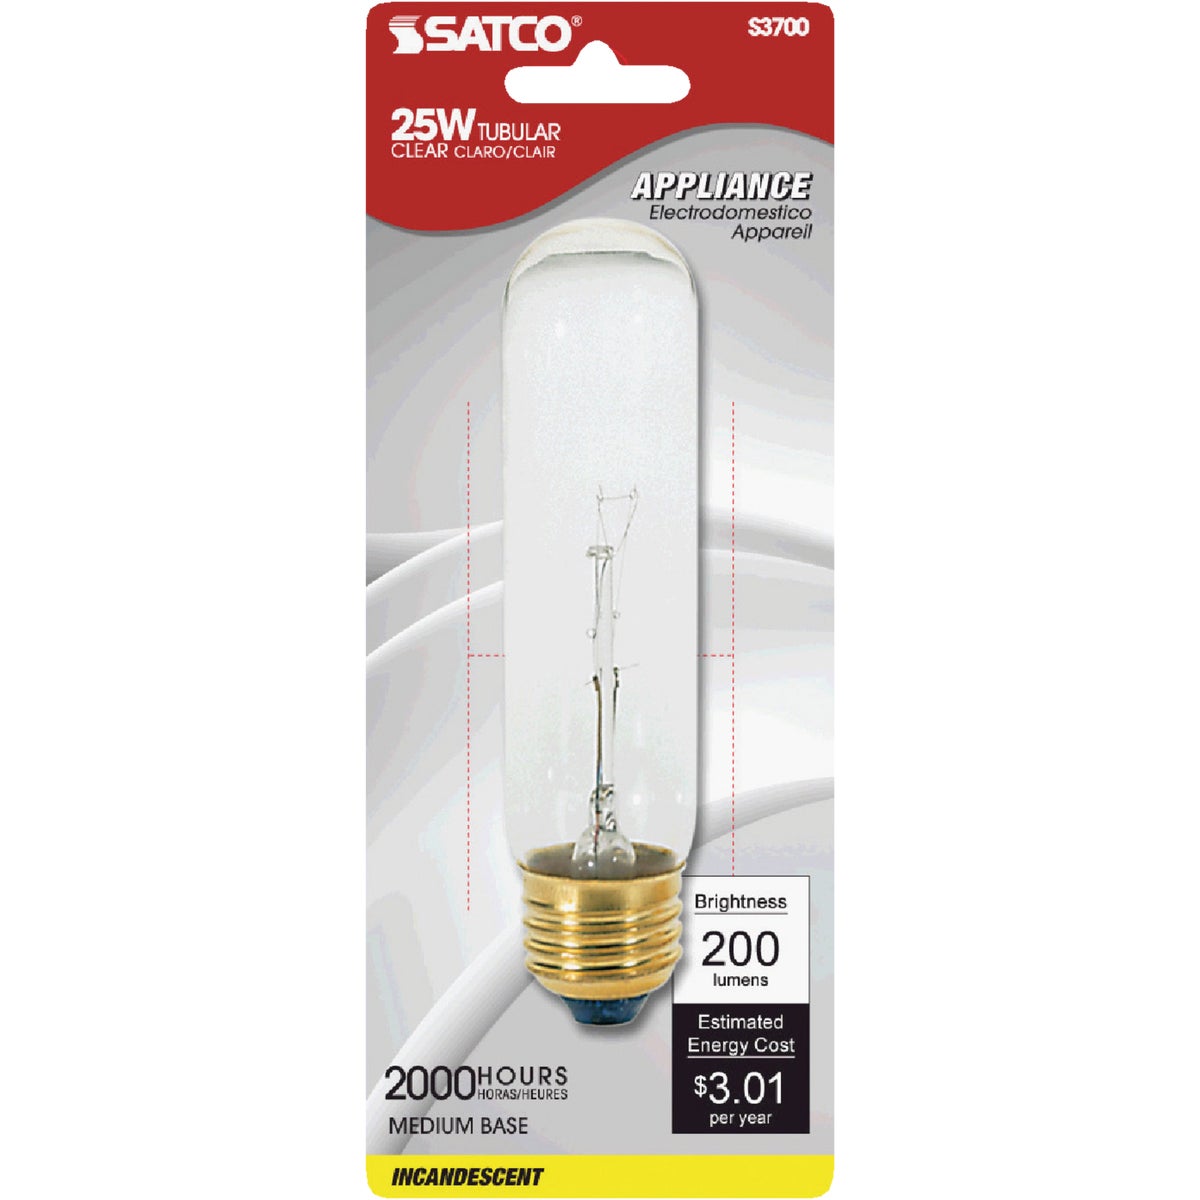 Item 502566, T10 tubular shape incandescent light bulb with medium brass base.